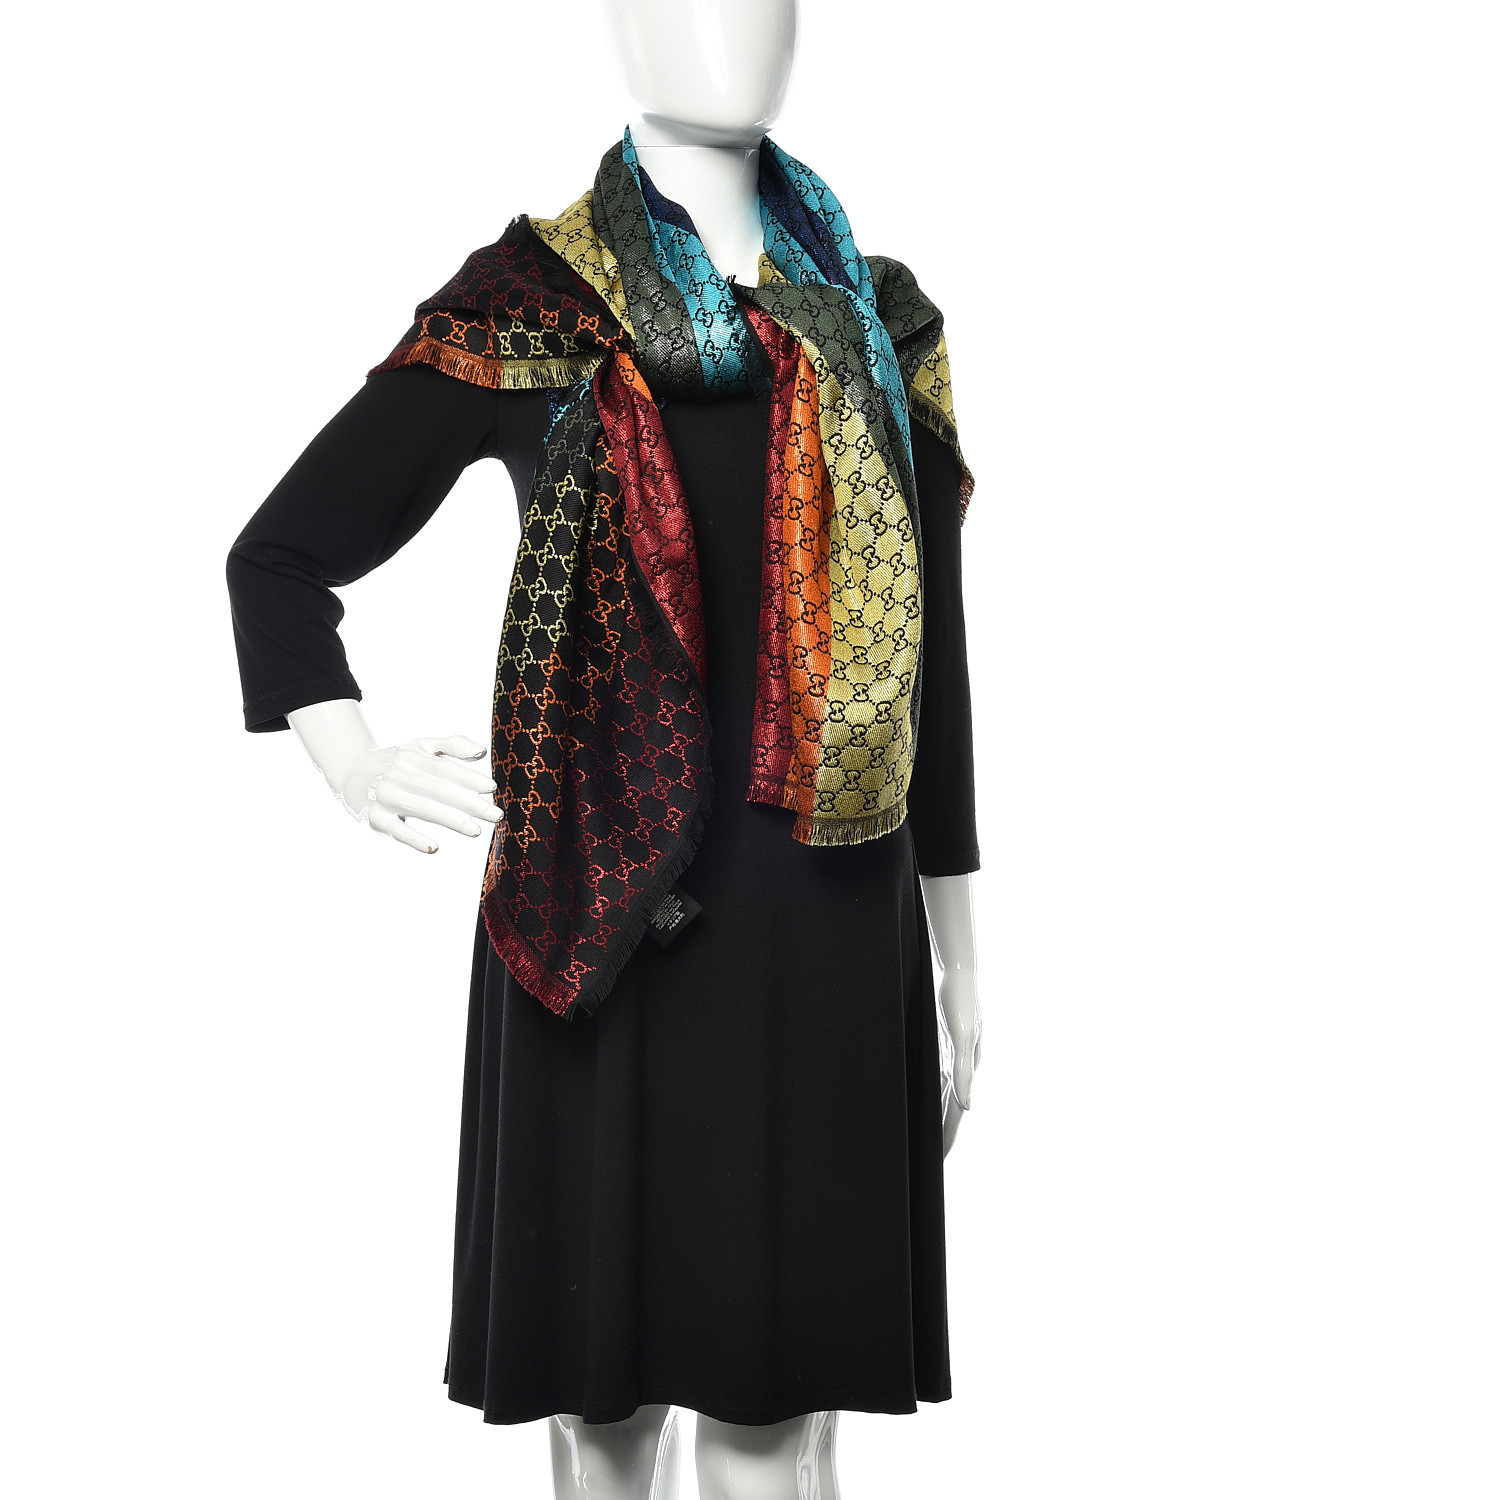 gucci jacquard shawl